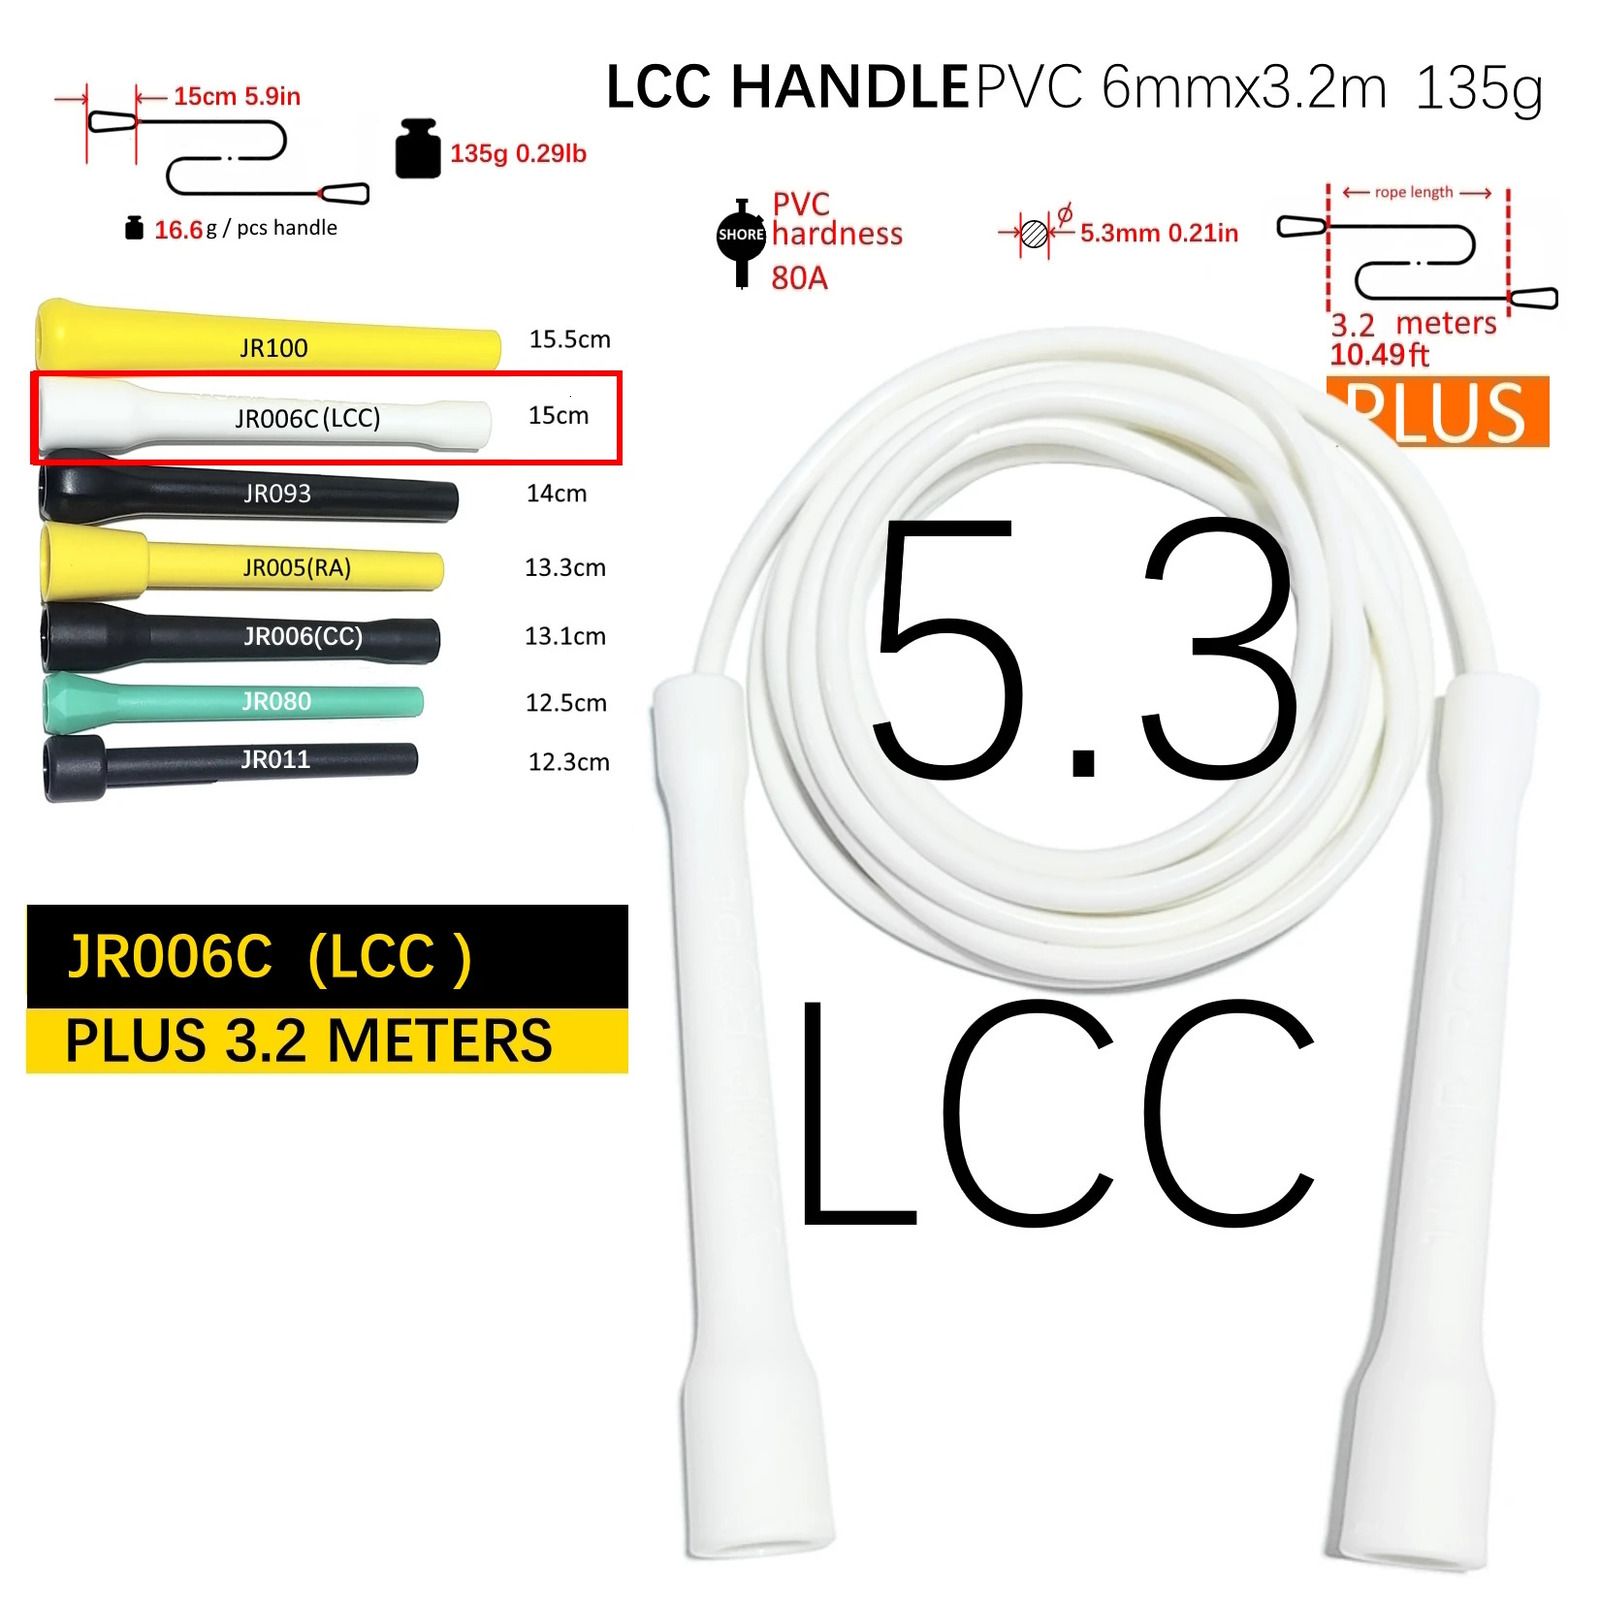 Lcc Pvc 5.3mmx3.2m18